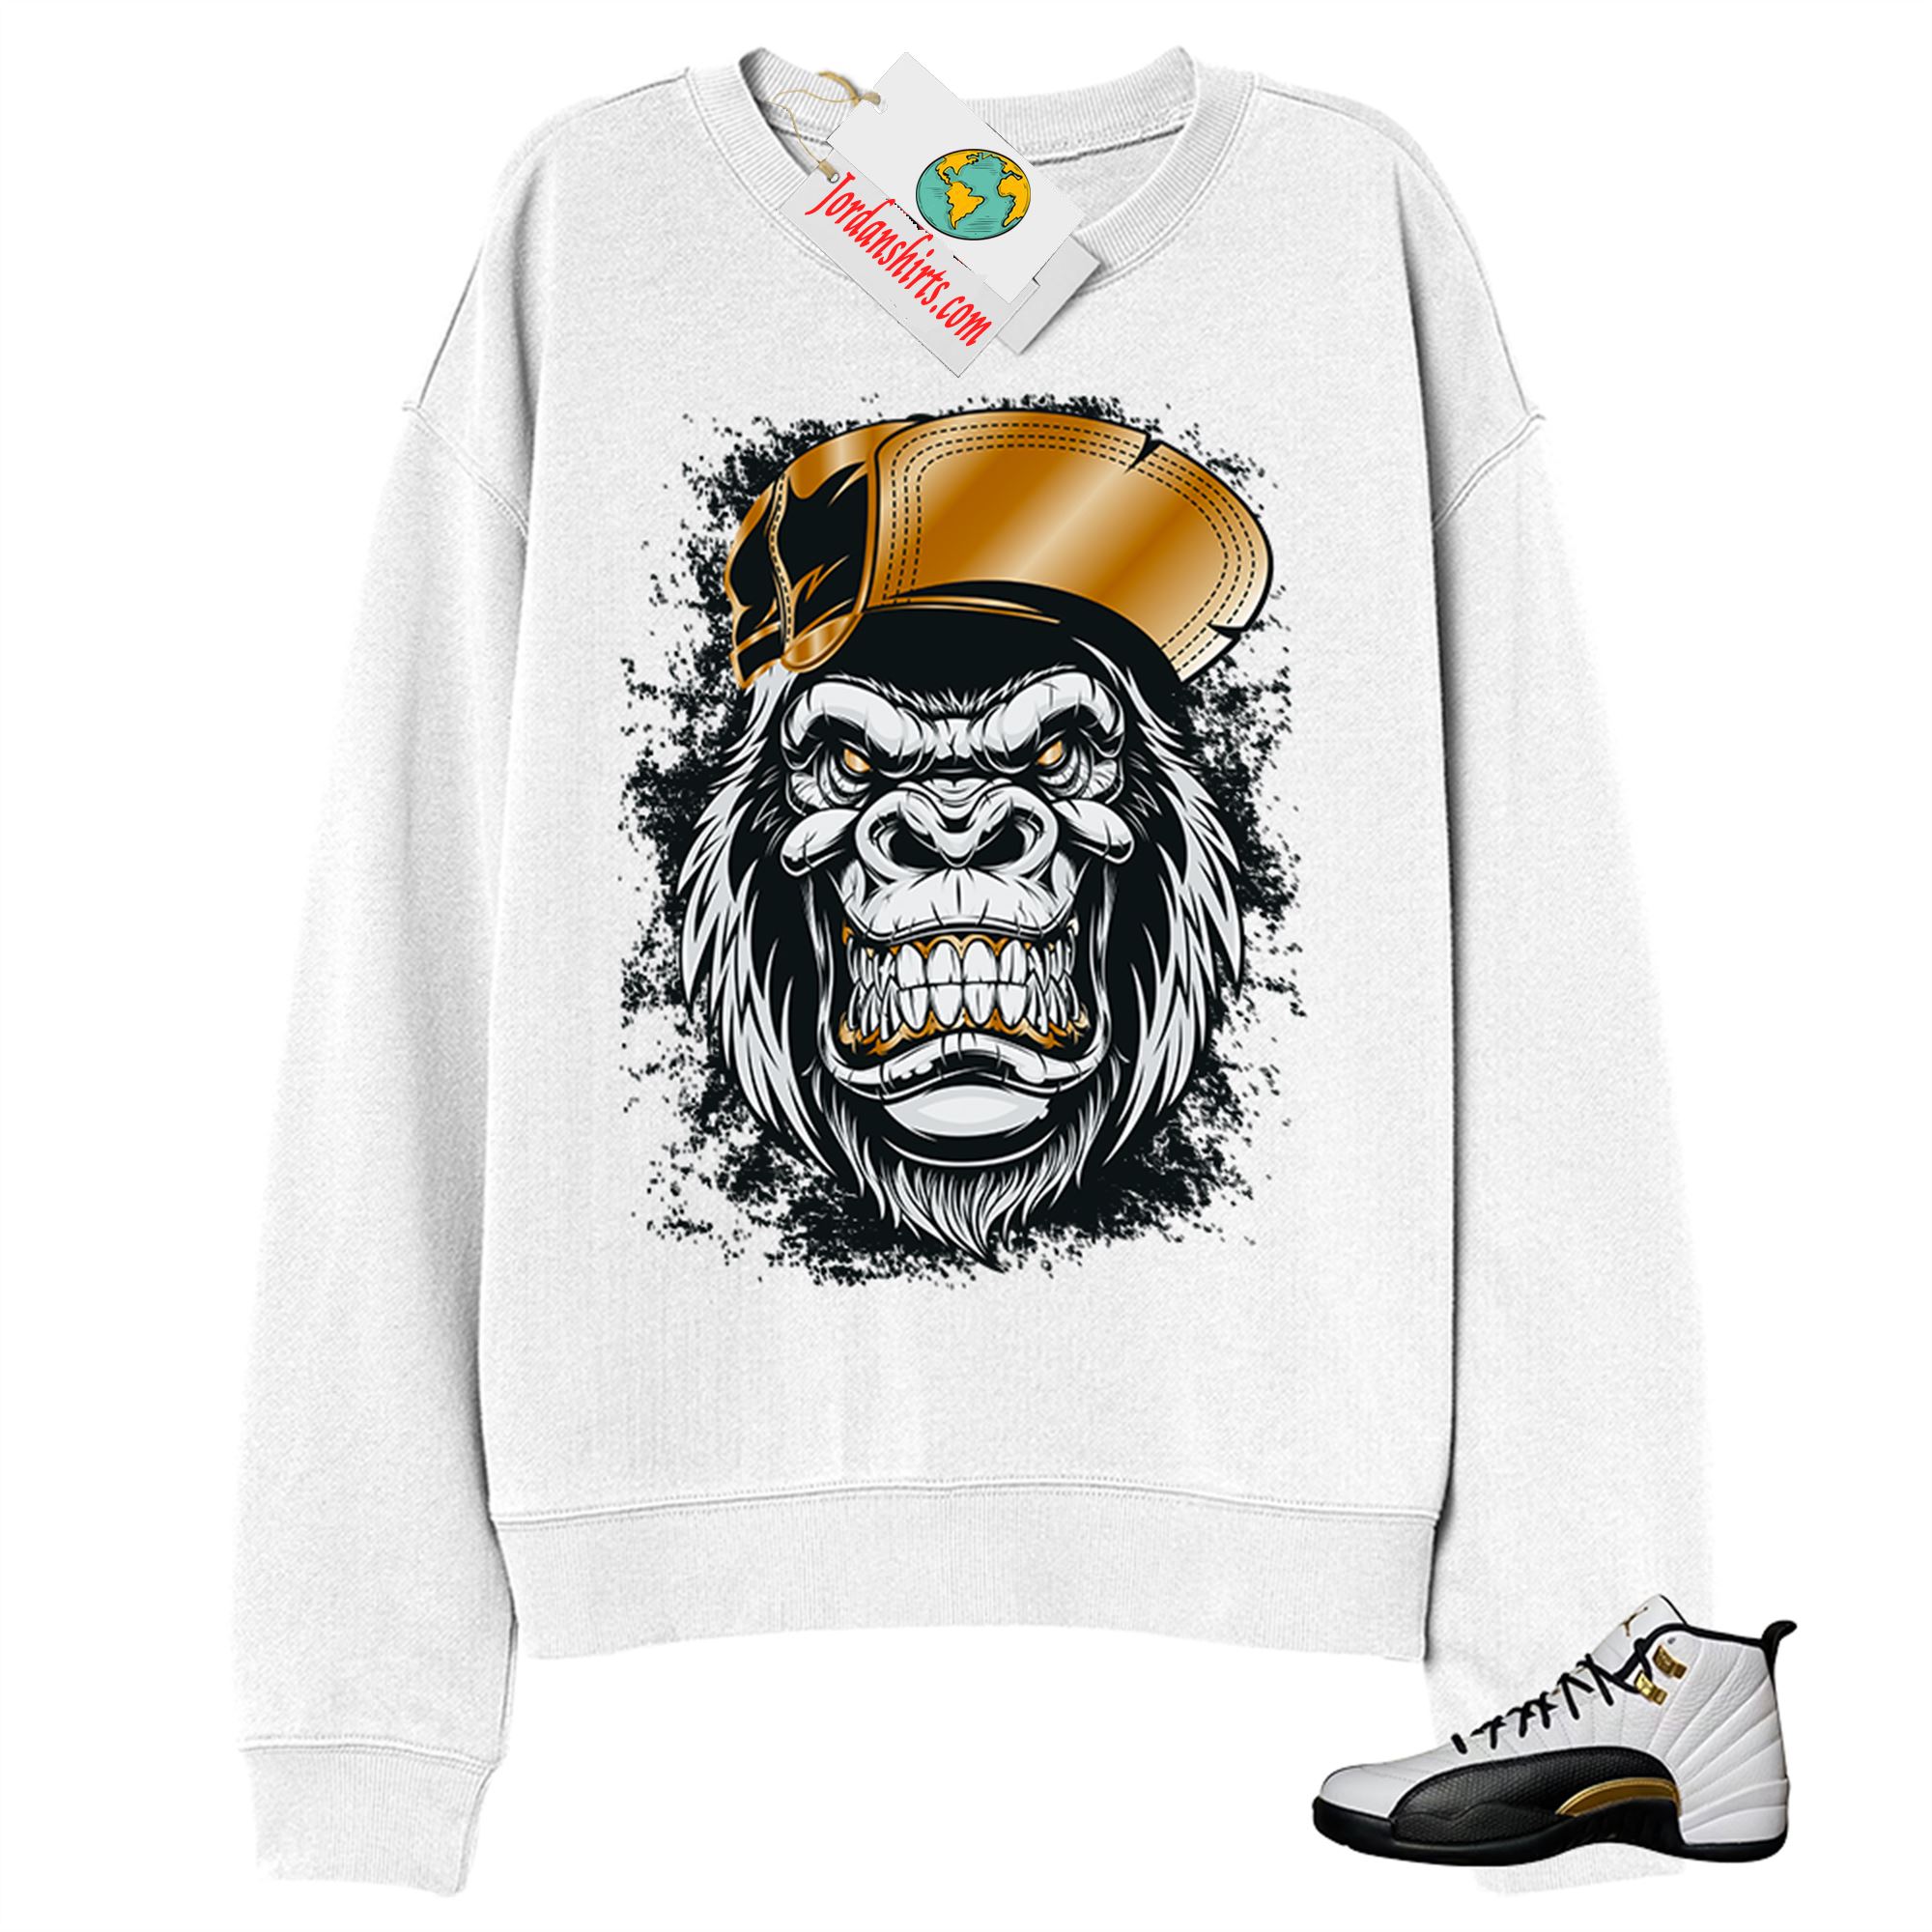 Jordan 12 Sweatshirt, Ferocious Gorilla White Sweatshirt Air Jordan 12 Royalty 12s Plus Size Up To 5xl